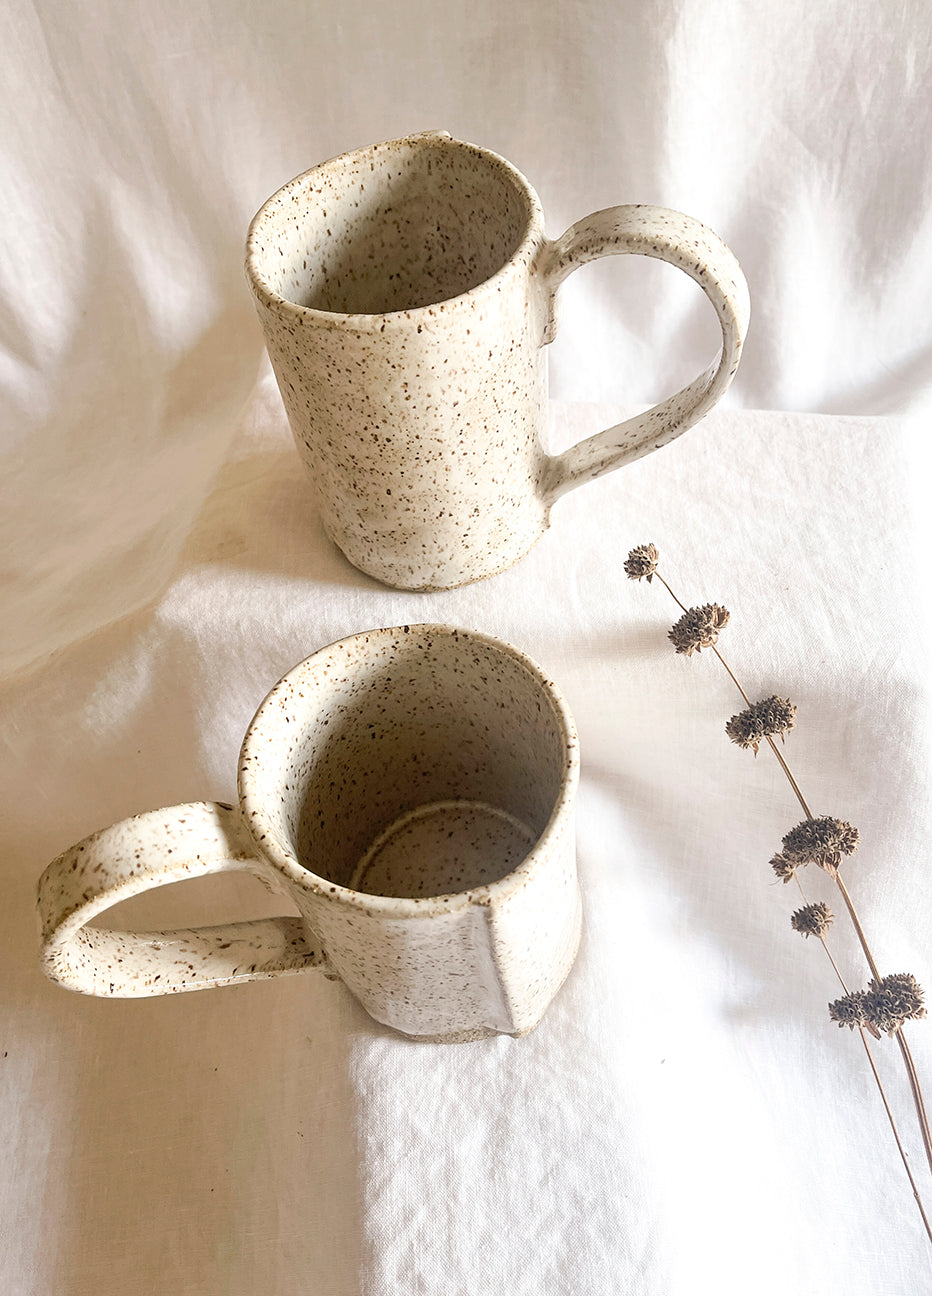 How to Marble with Nail Polish - Upcycled Mug Craft